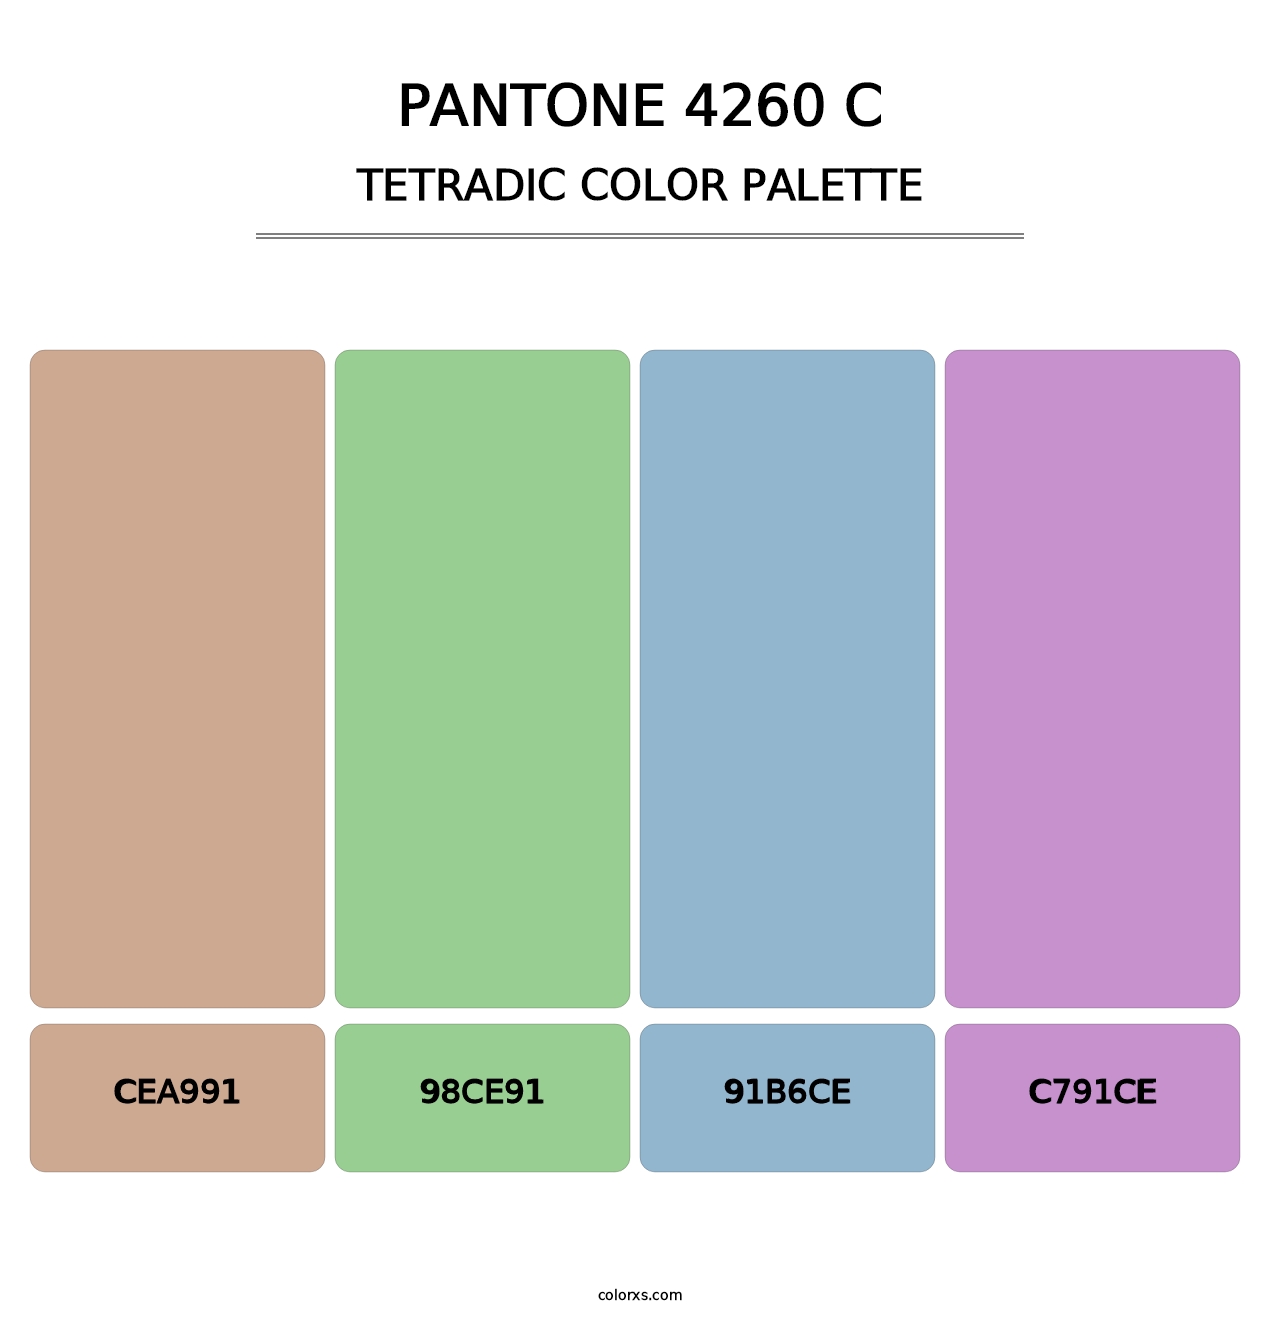 PANTONE 4260 C - Tetradic Color Palette